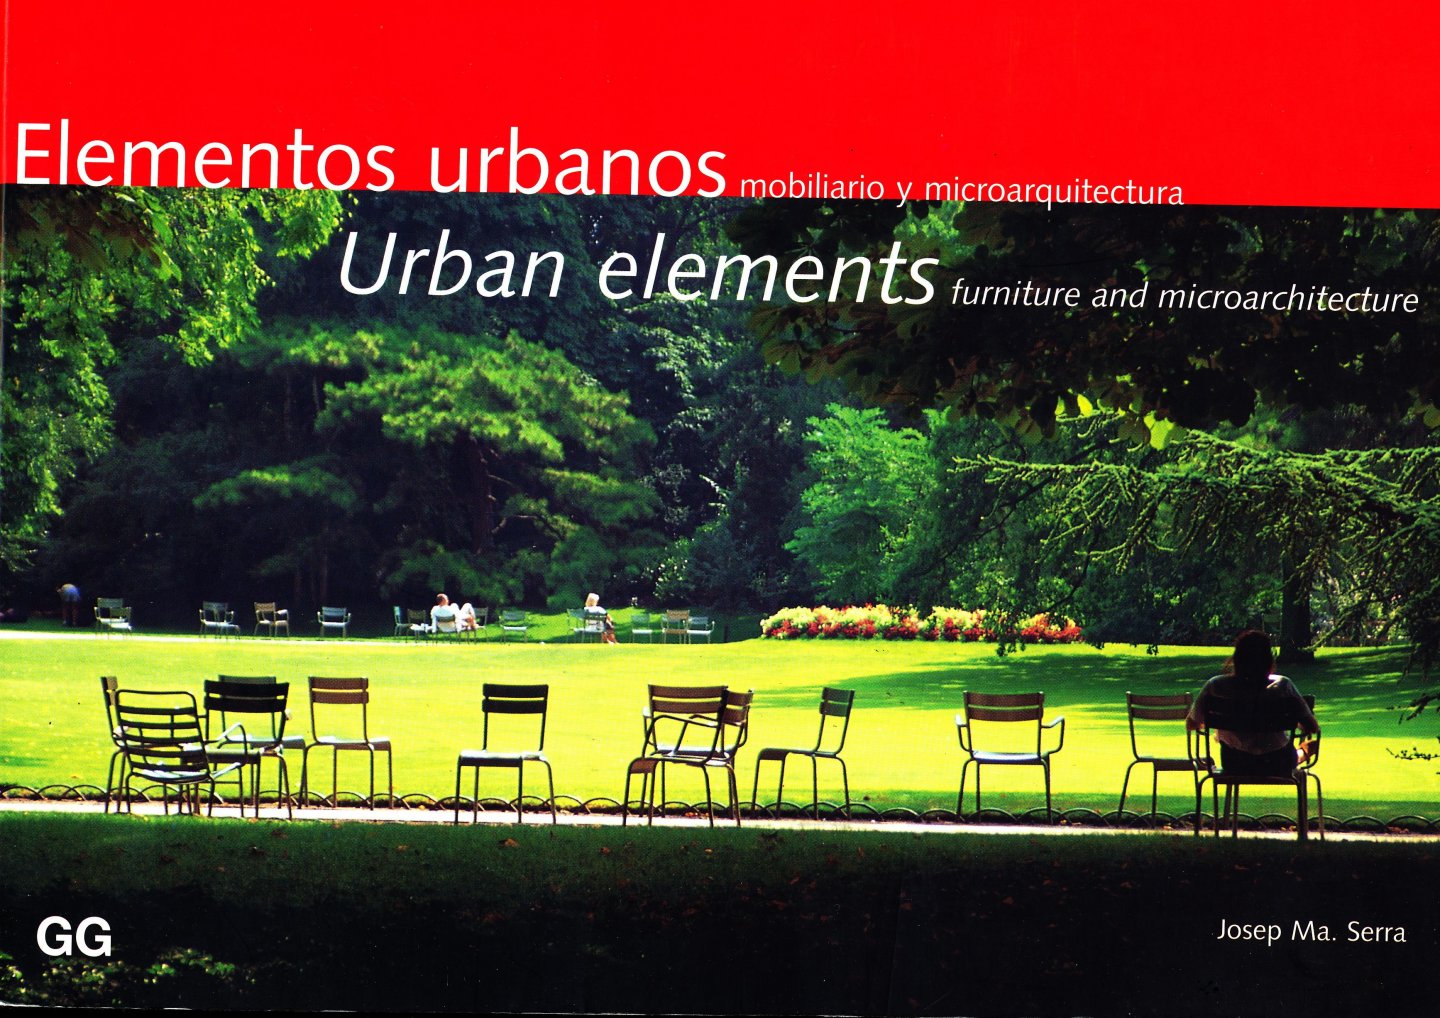 Serra, Josep Ma. - Elementos urbanos Mobiliario y microarquitectura / Urban elements furniture and microarchitecture